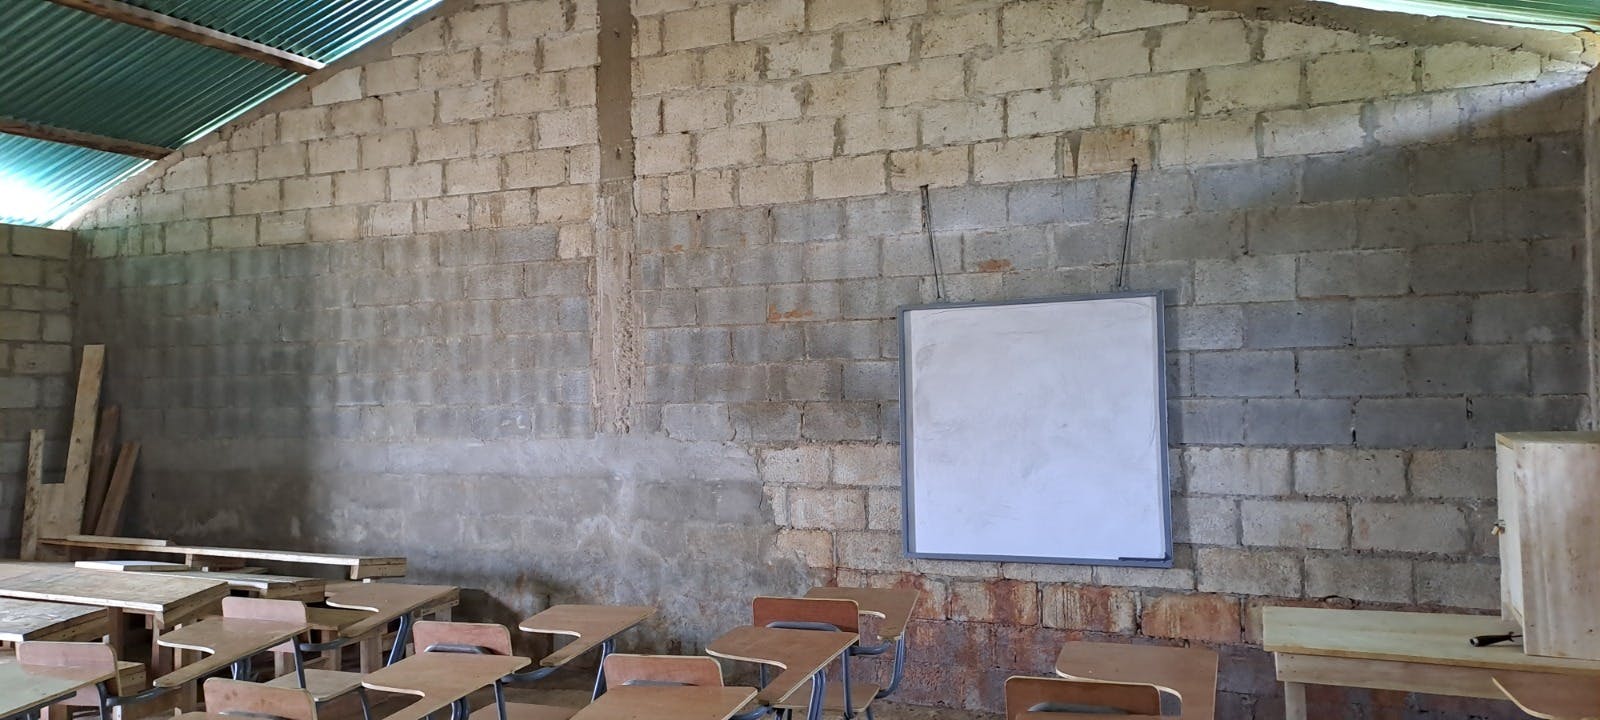 Classroom Upgrades